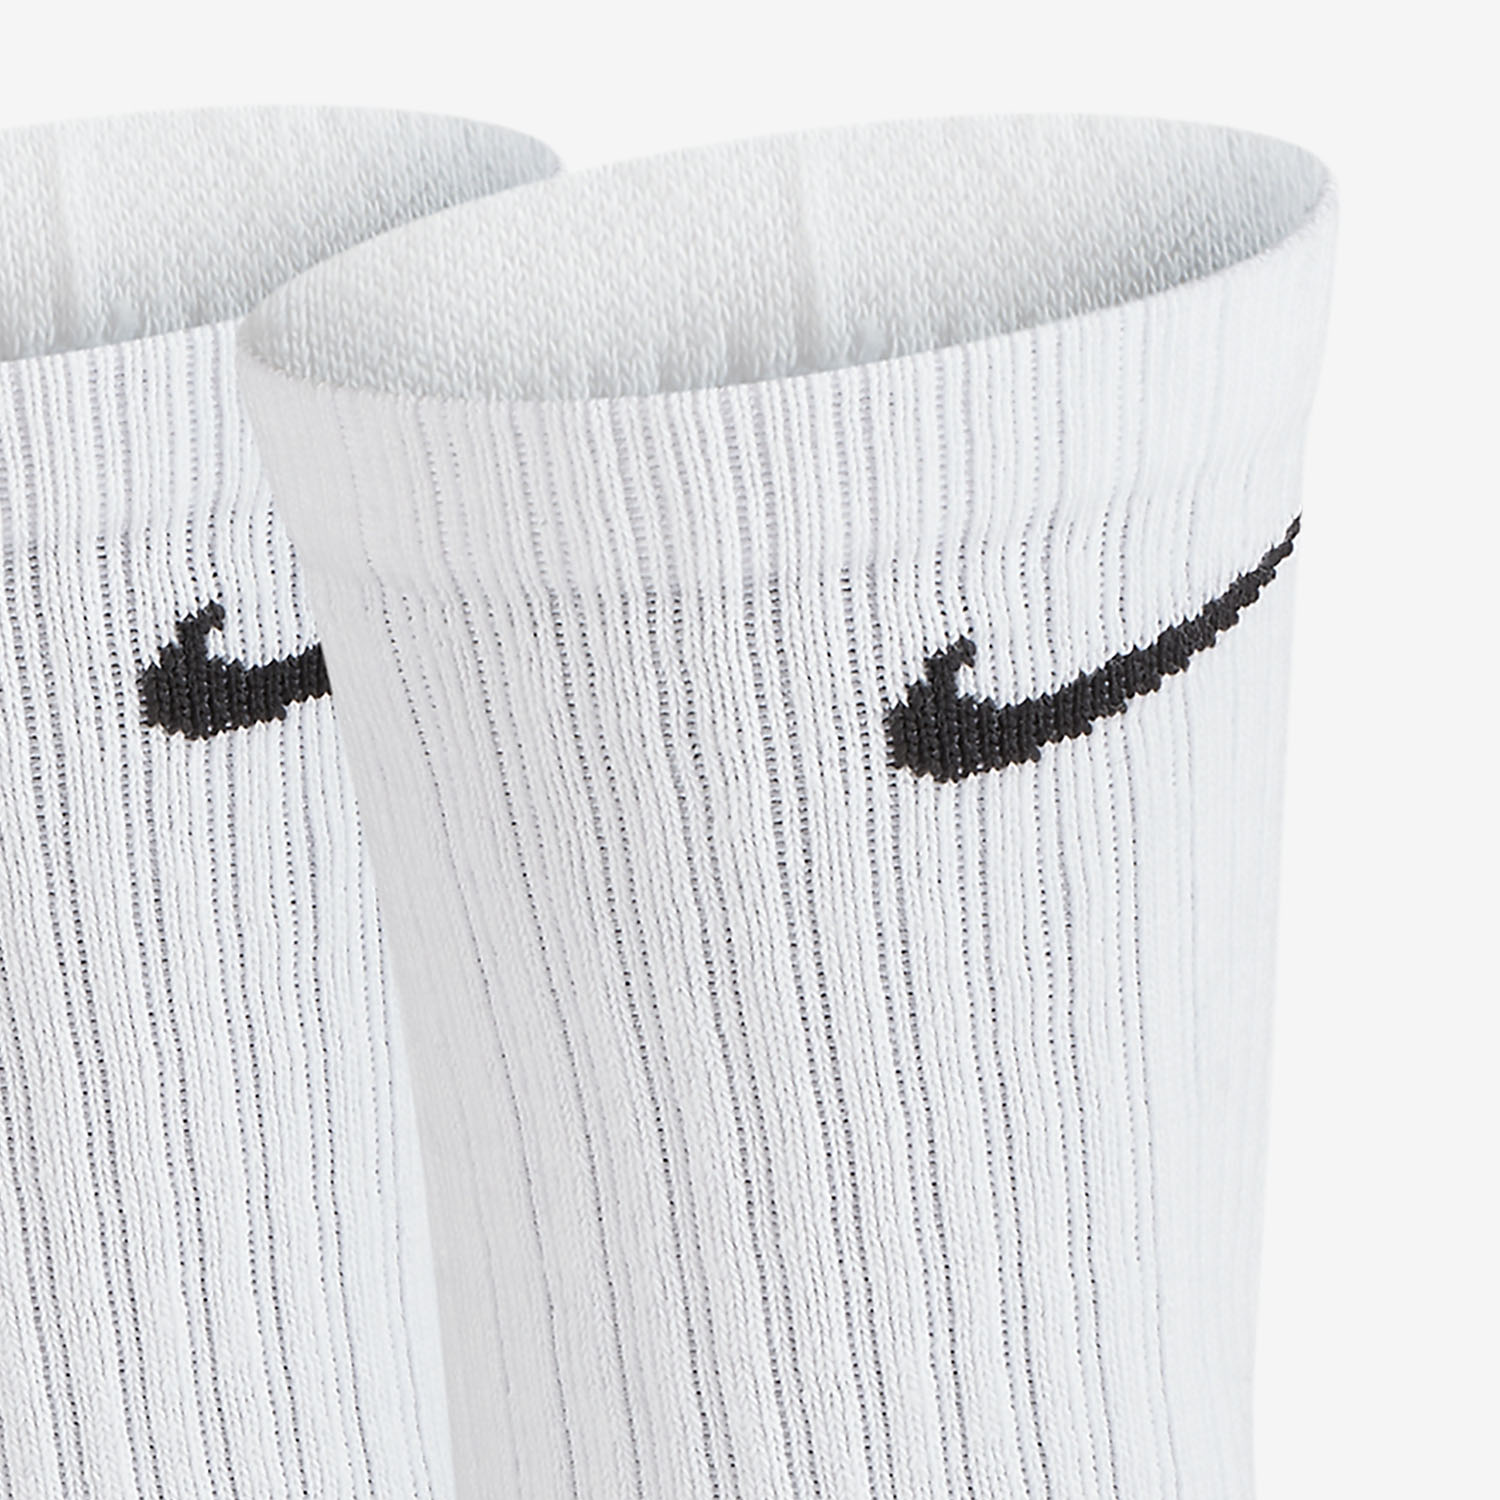 Nike Everyday Cushioned Crew x 3 Socks - White/Black